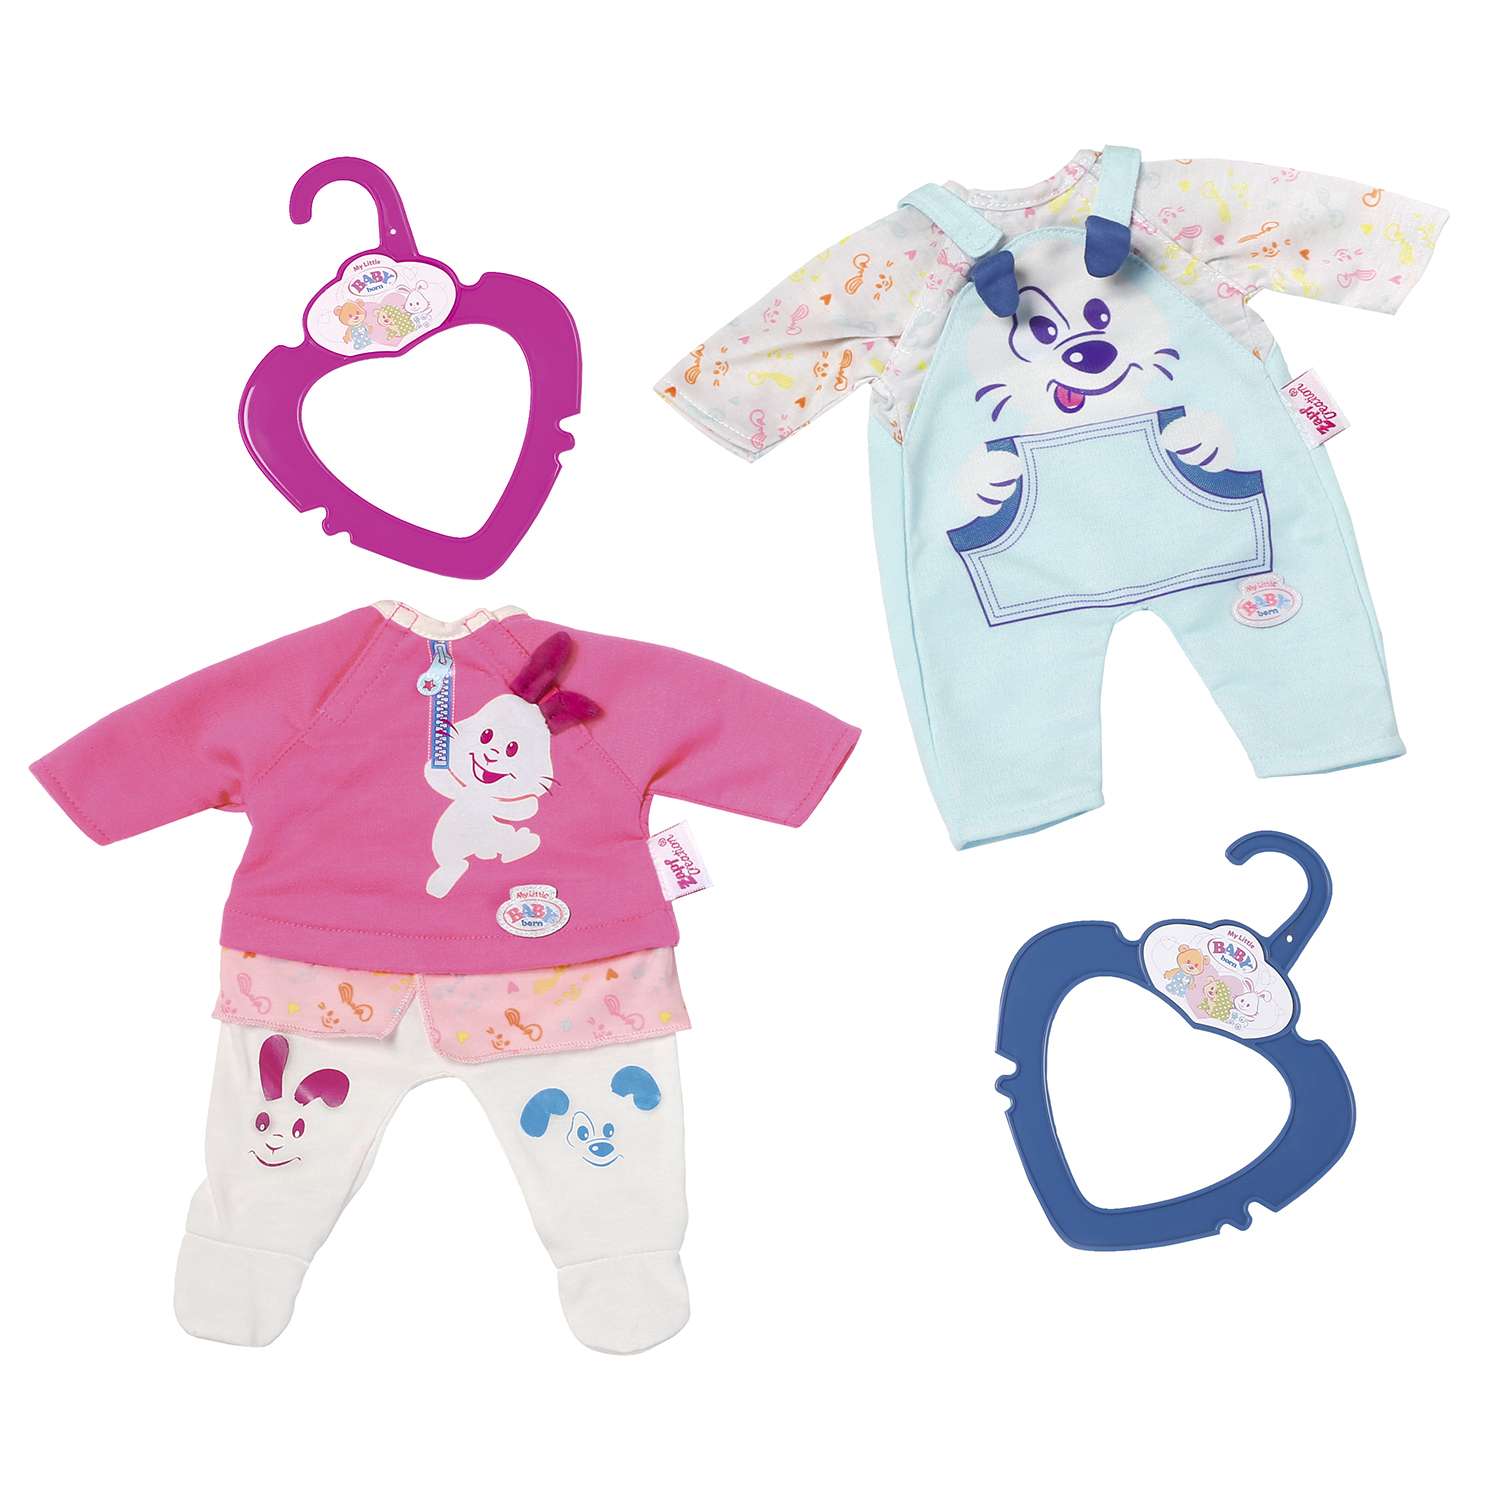 Одежда для куклы Zapf Creation My little Baby born в ассортименте 824-351 824-351 - фото 1